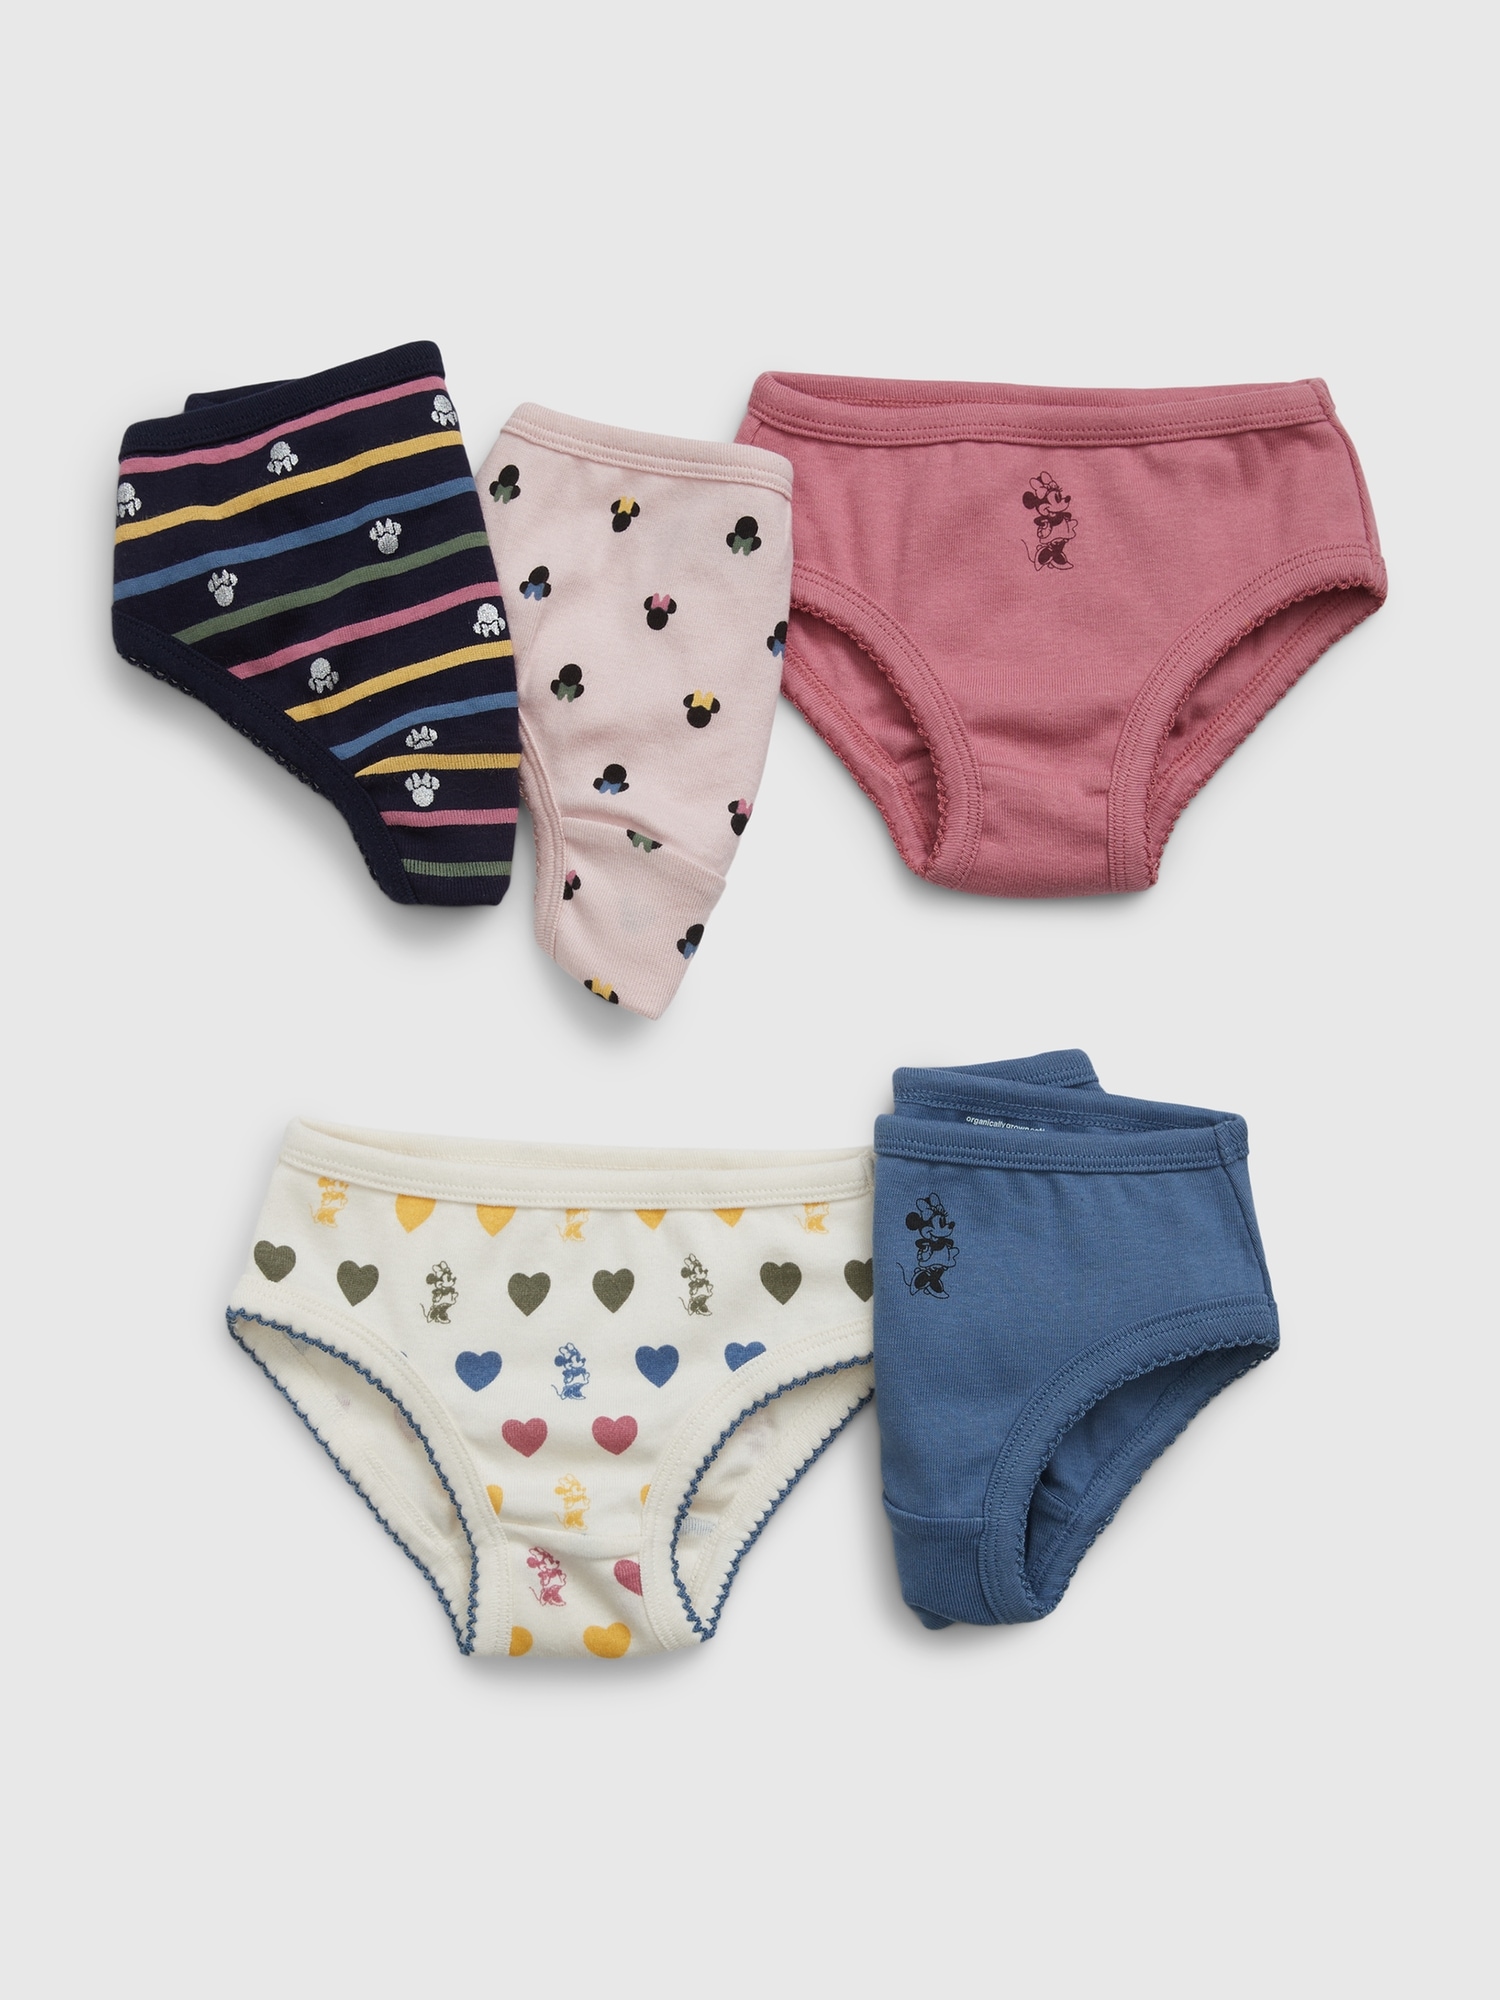 NEW GAP KIDS DISNEY Girls Small Underwear Small 6-7 NWOT 4 Pair